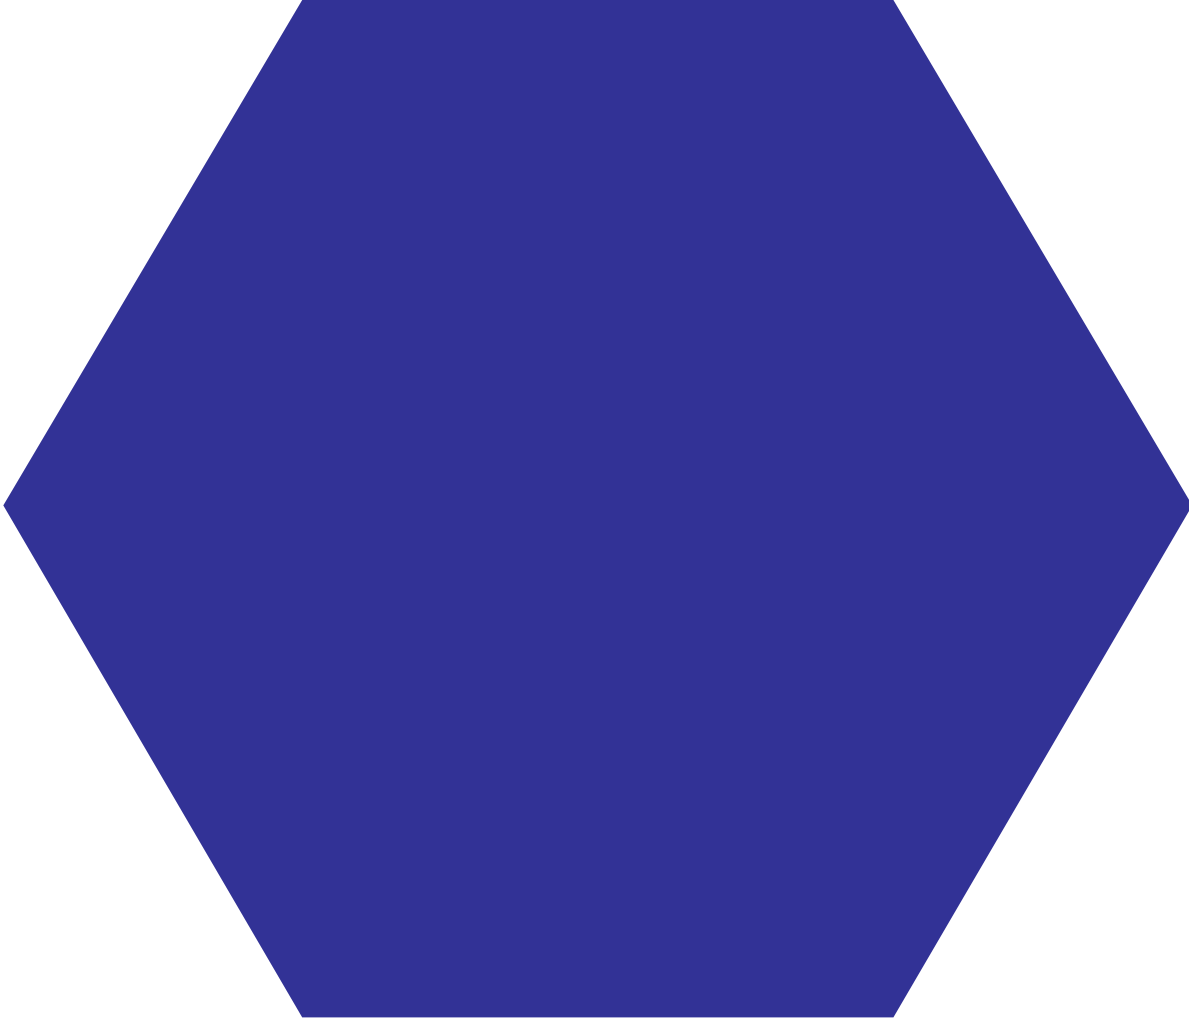 Blue Hexagon Shapeon Dark Background PNG